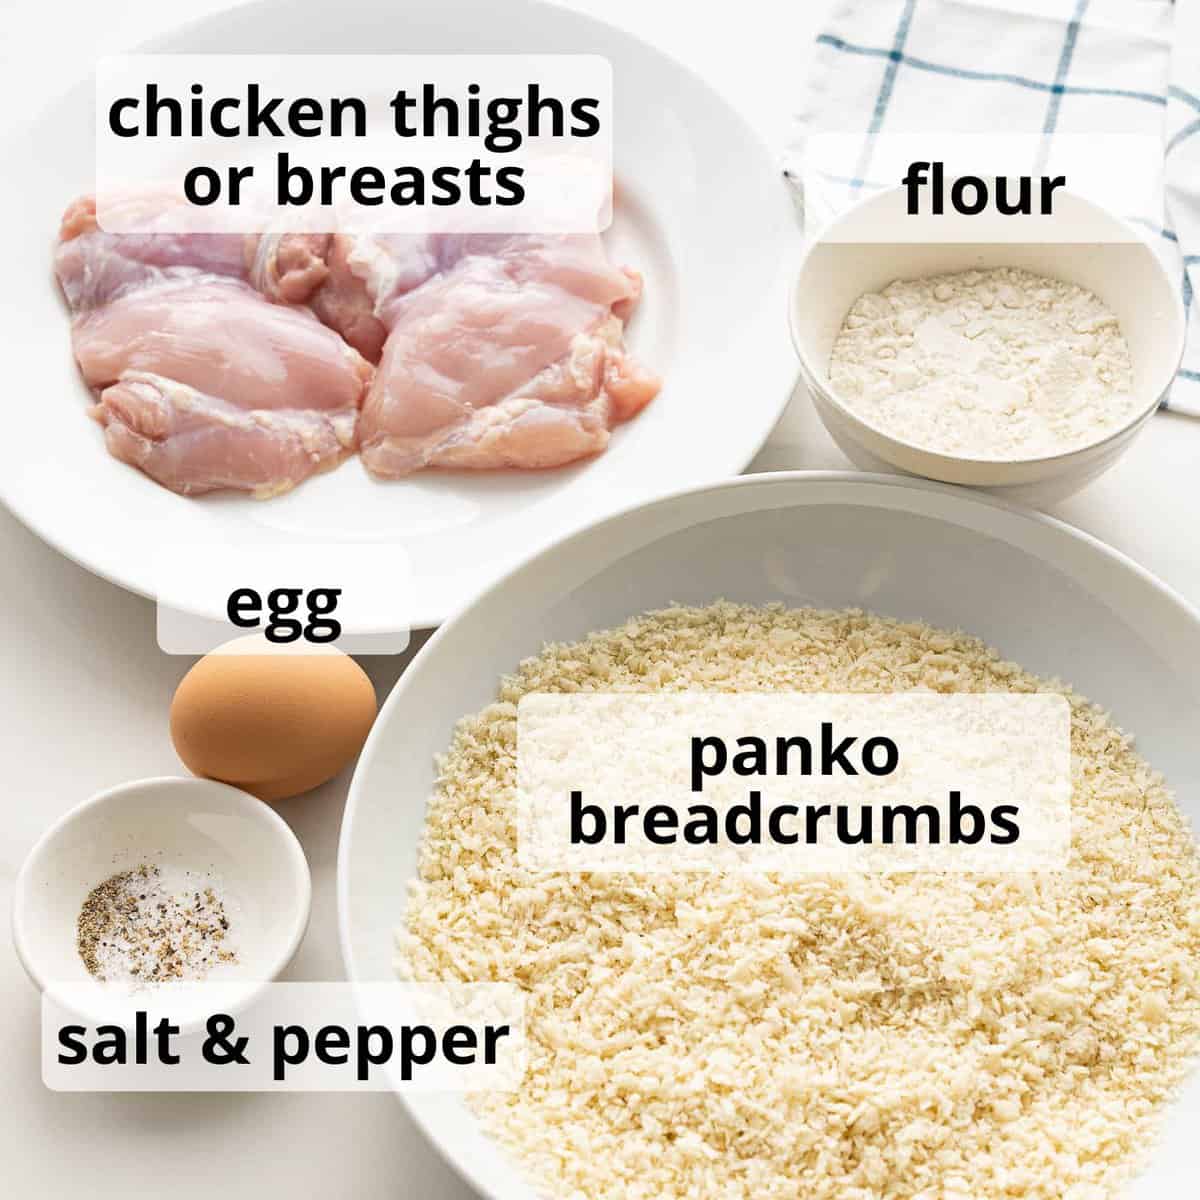 Ingredients for chicken katsu including panko breadcrumbs, chicken, flour, and egg.